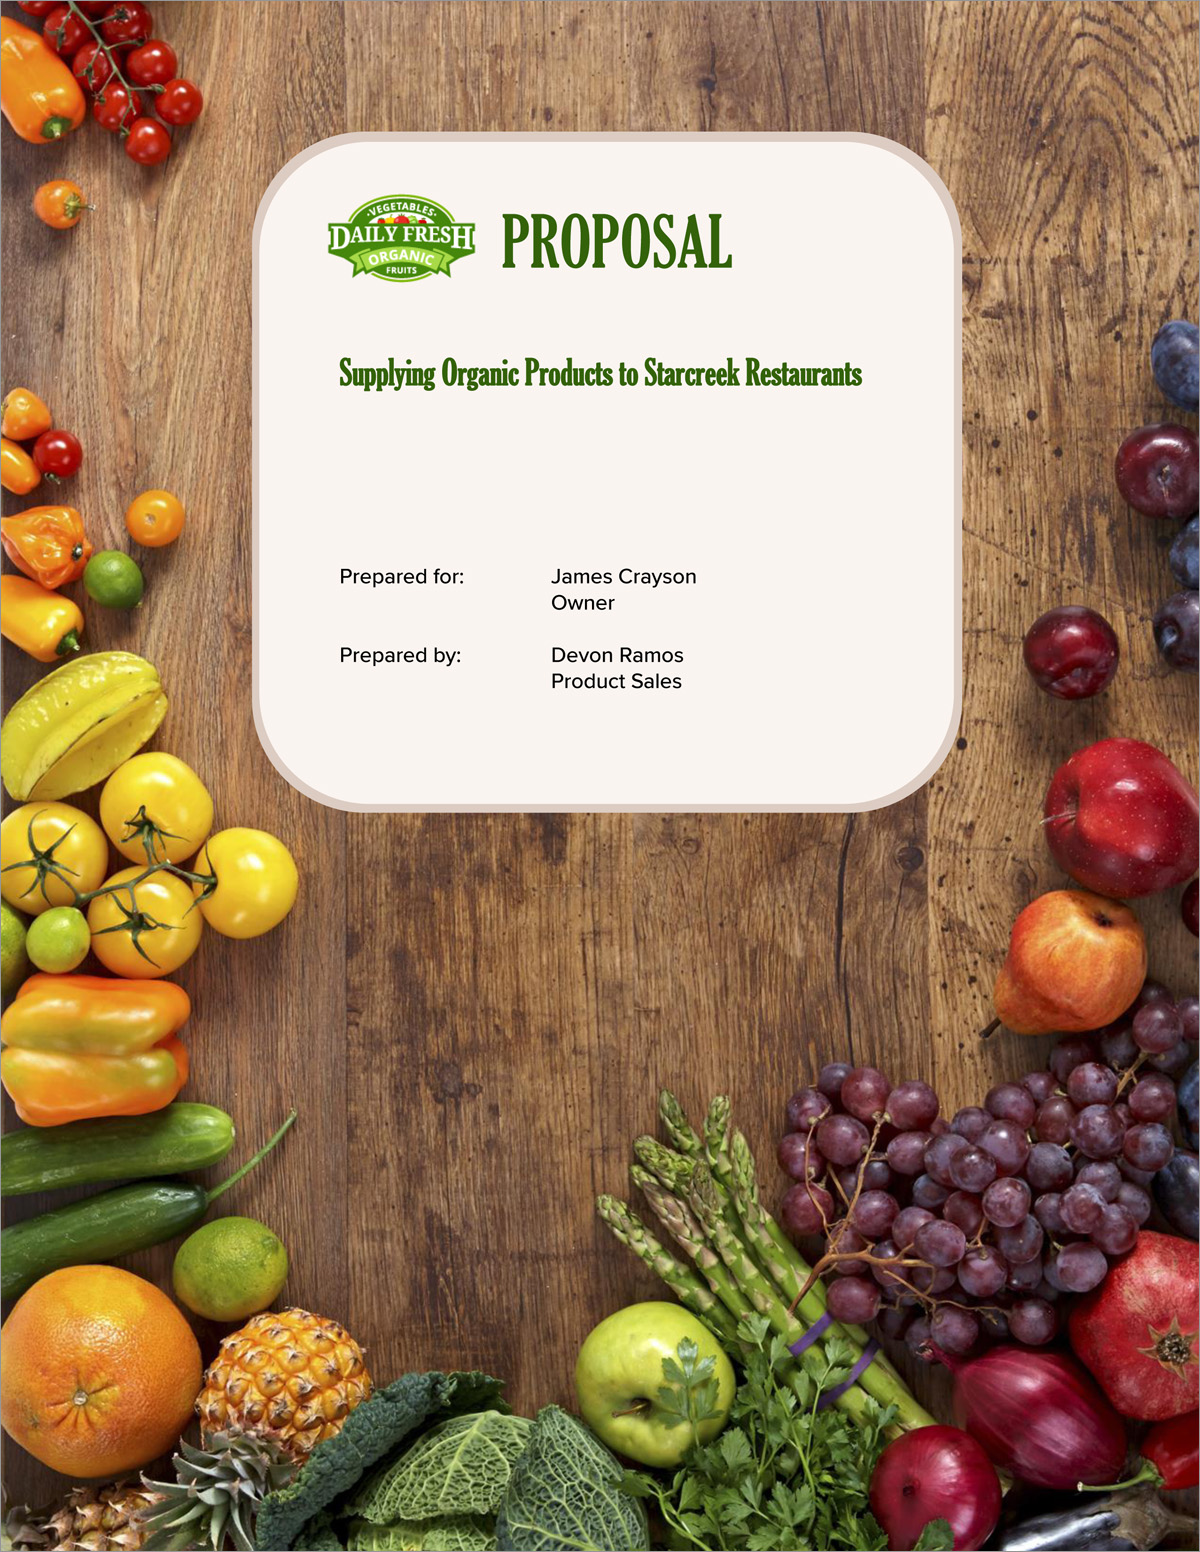 organic farming business plan